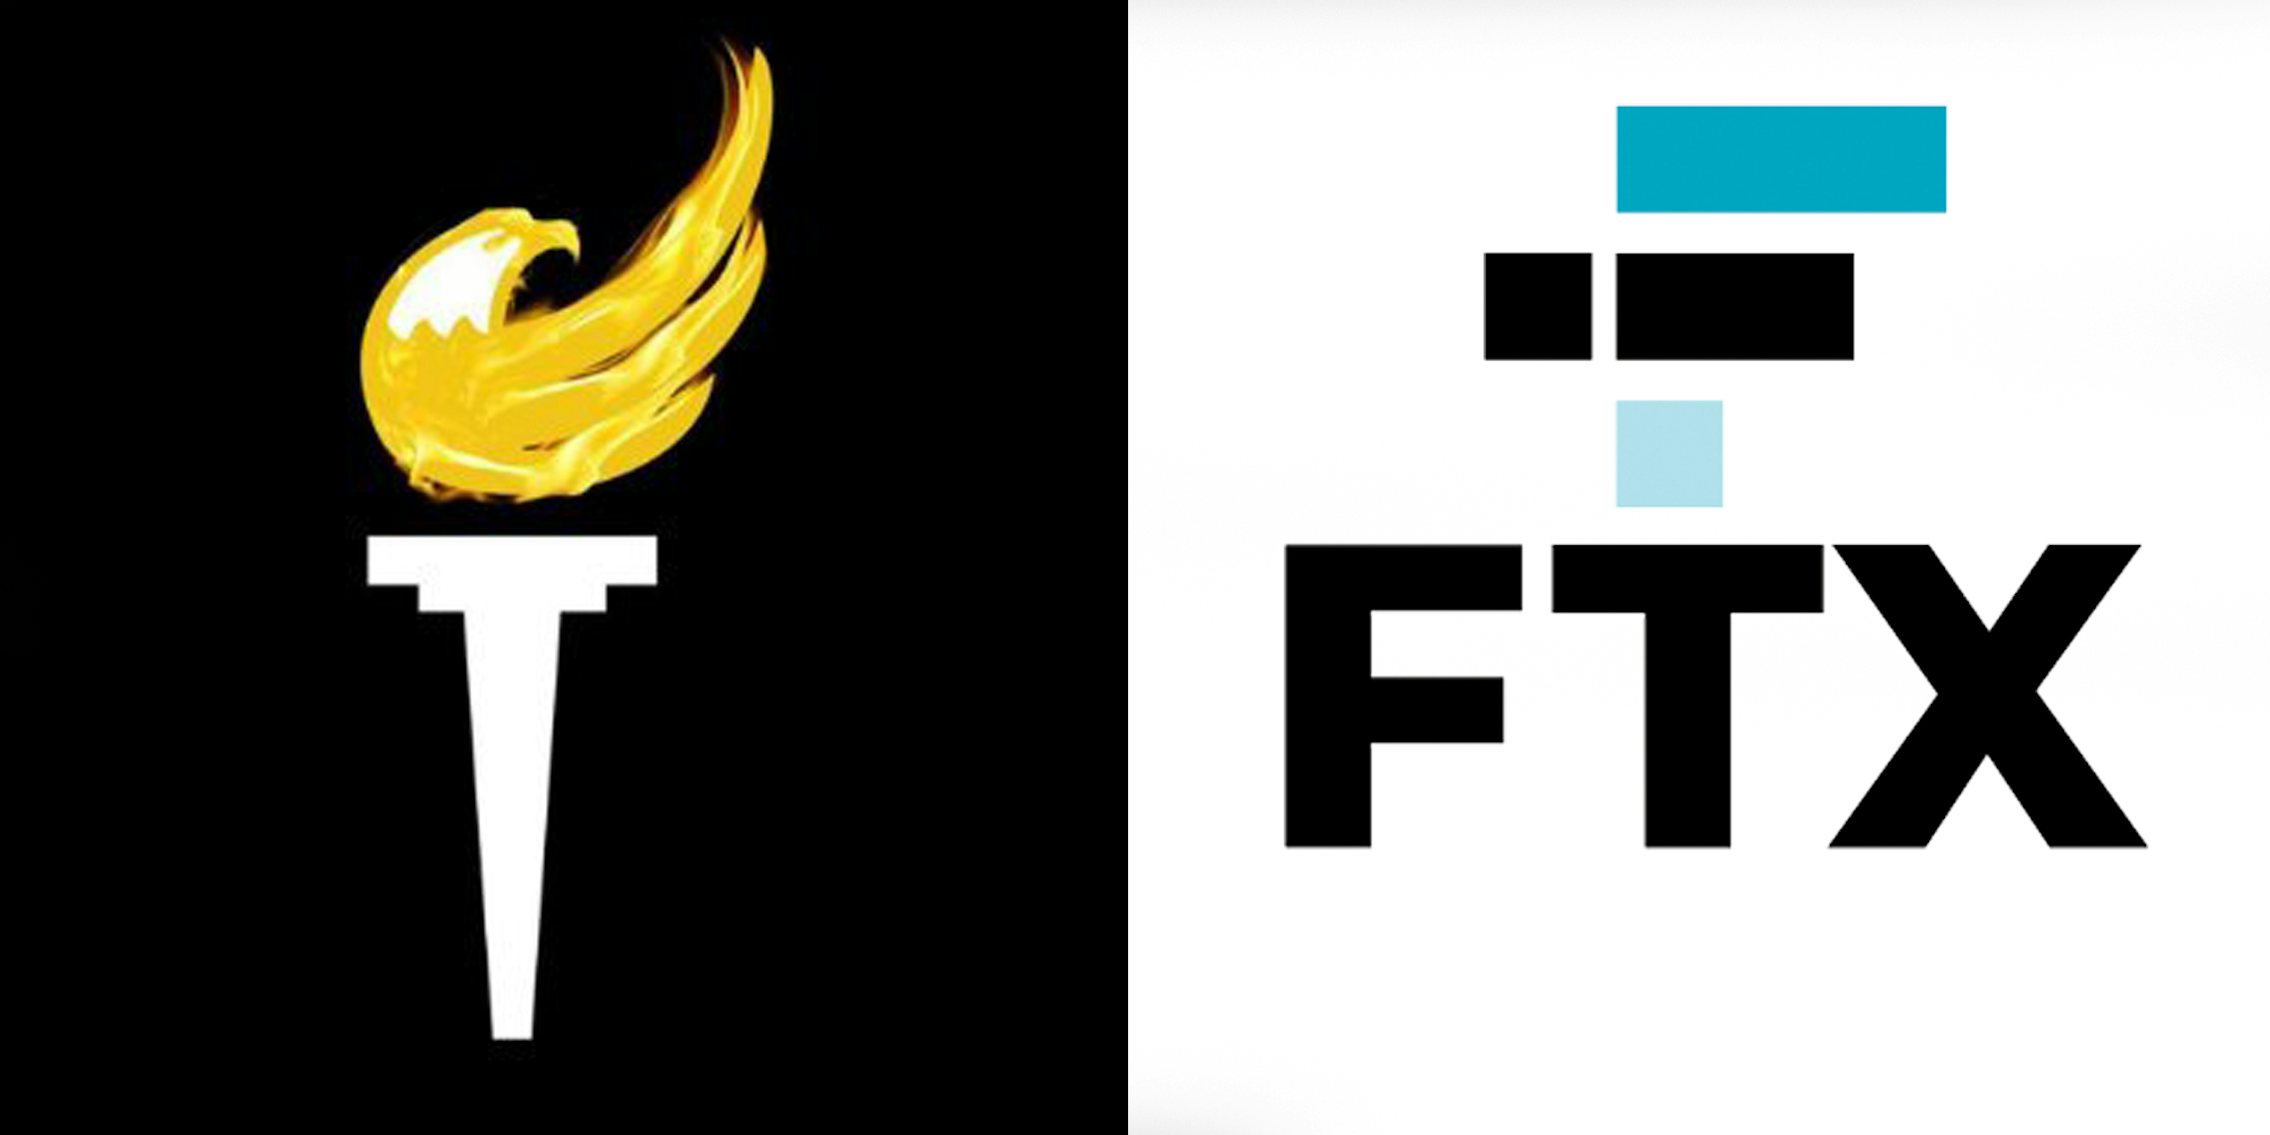 LPN logo on black background (l) FTX logo on white background (r)